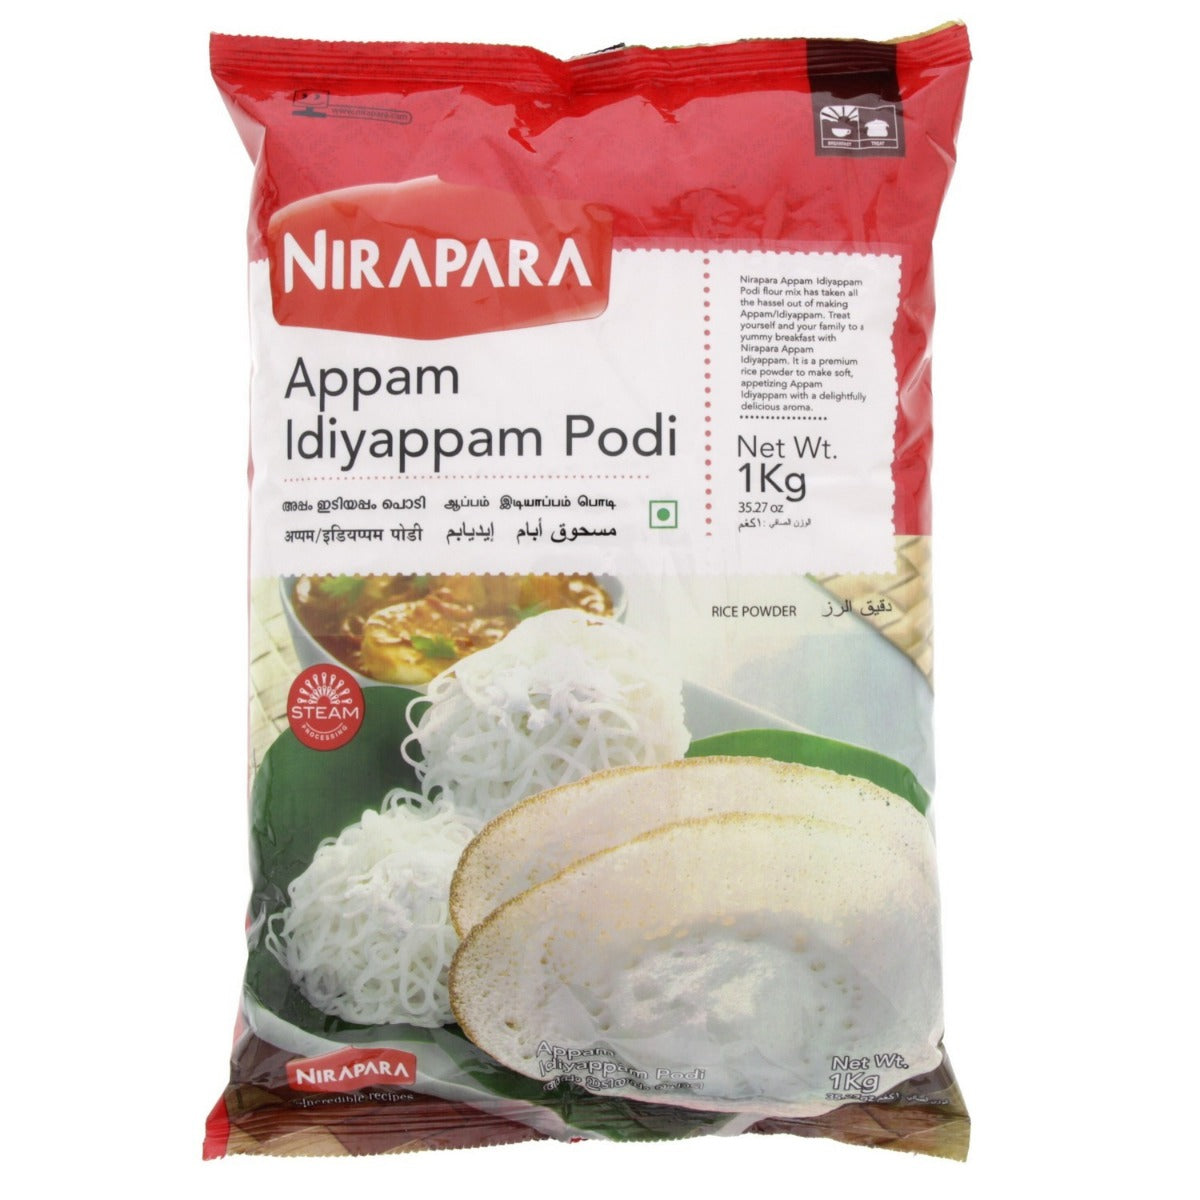 Nirapara Appam- Iddiyappam Podi 1 kg